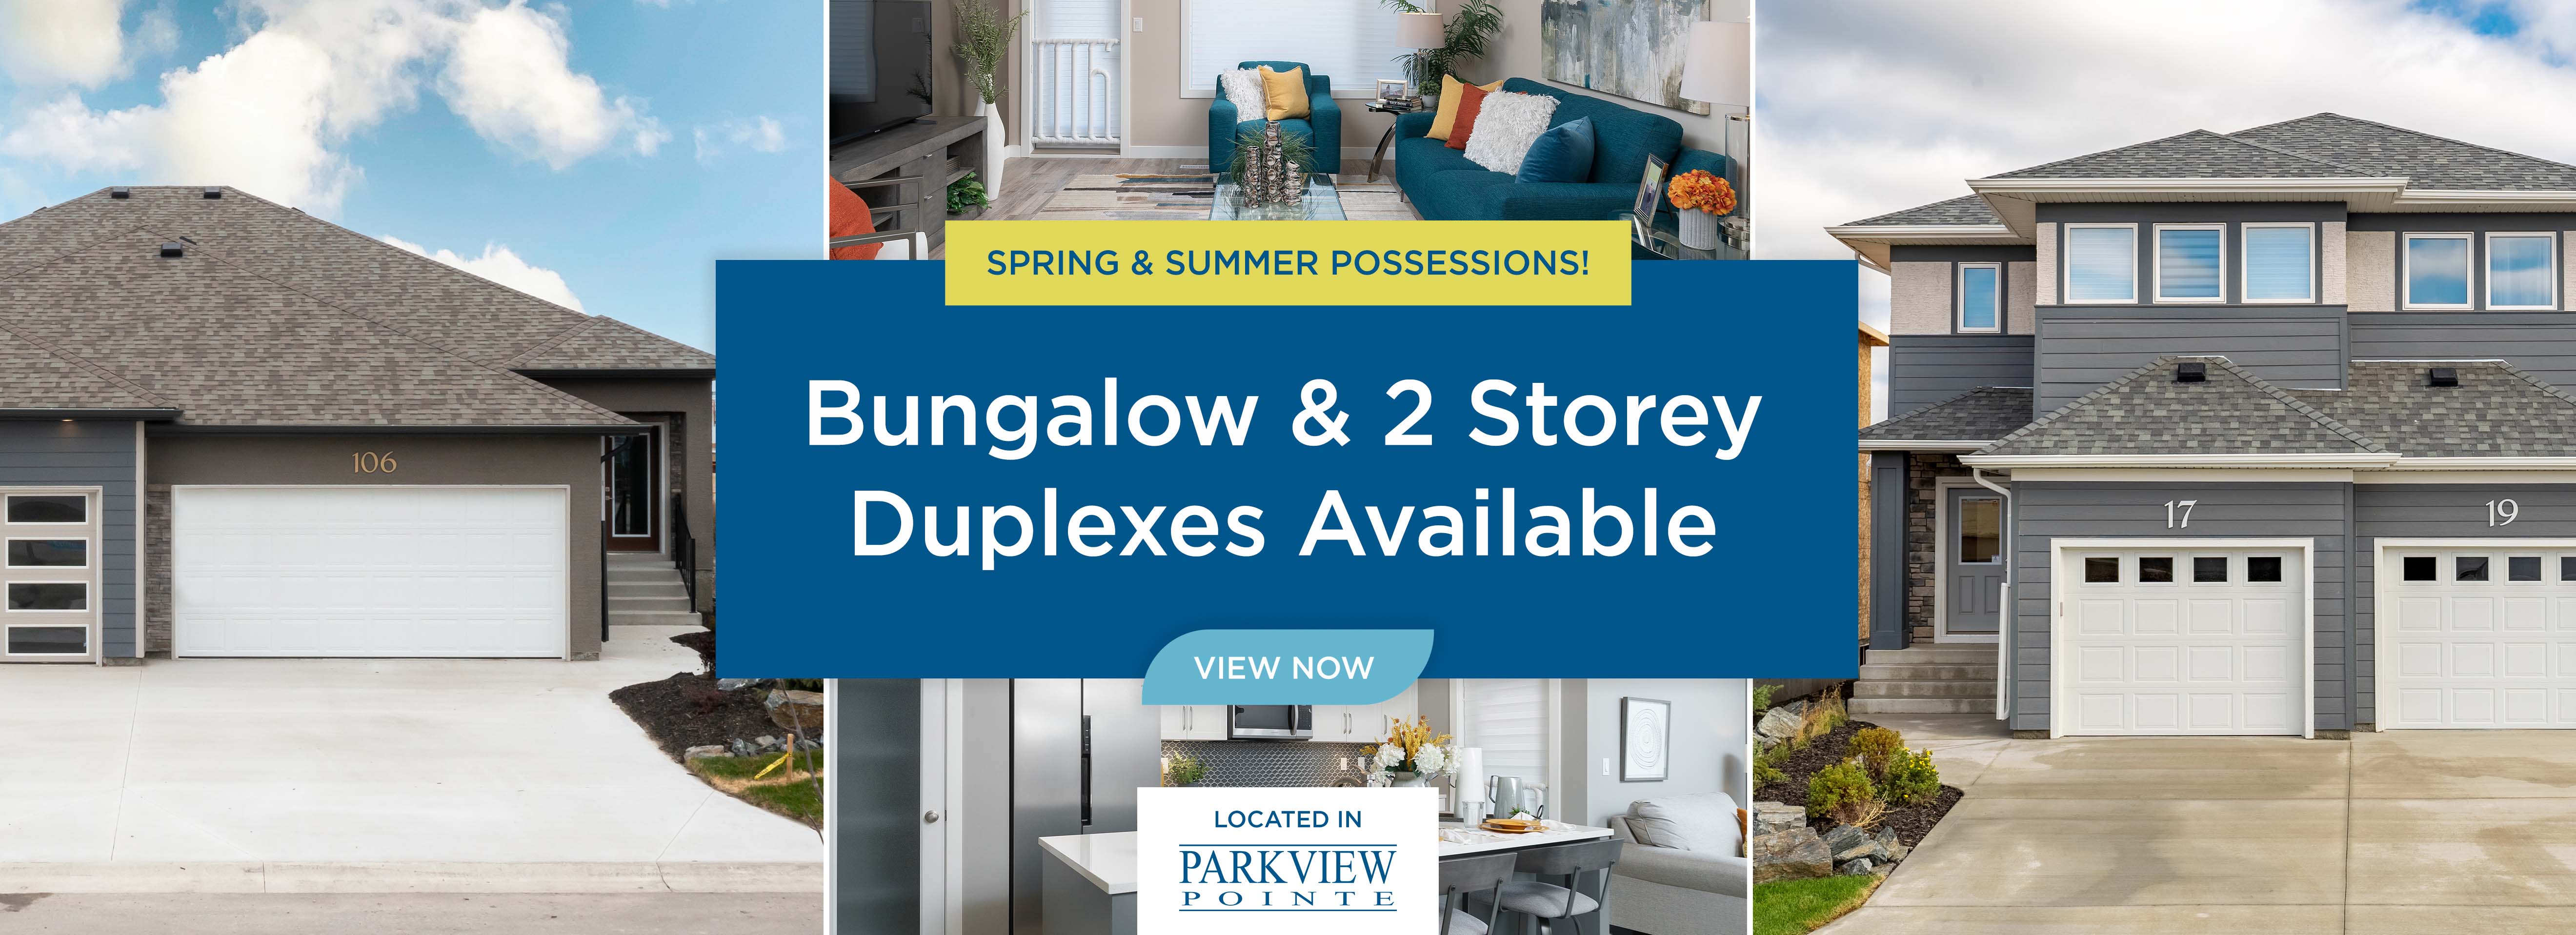 duplex homes banner copy